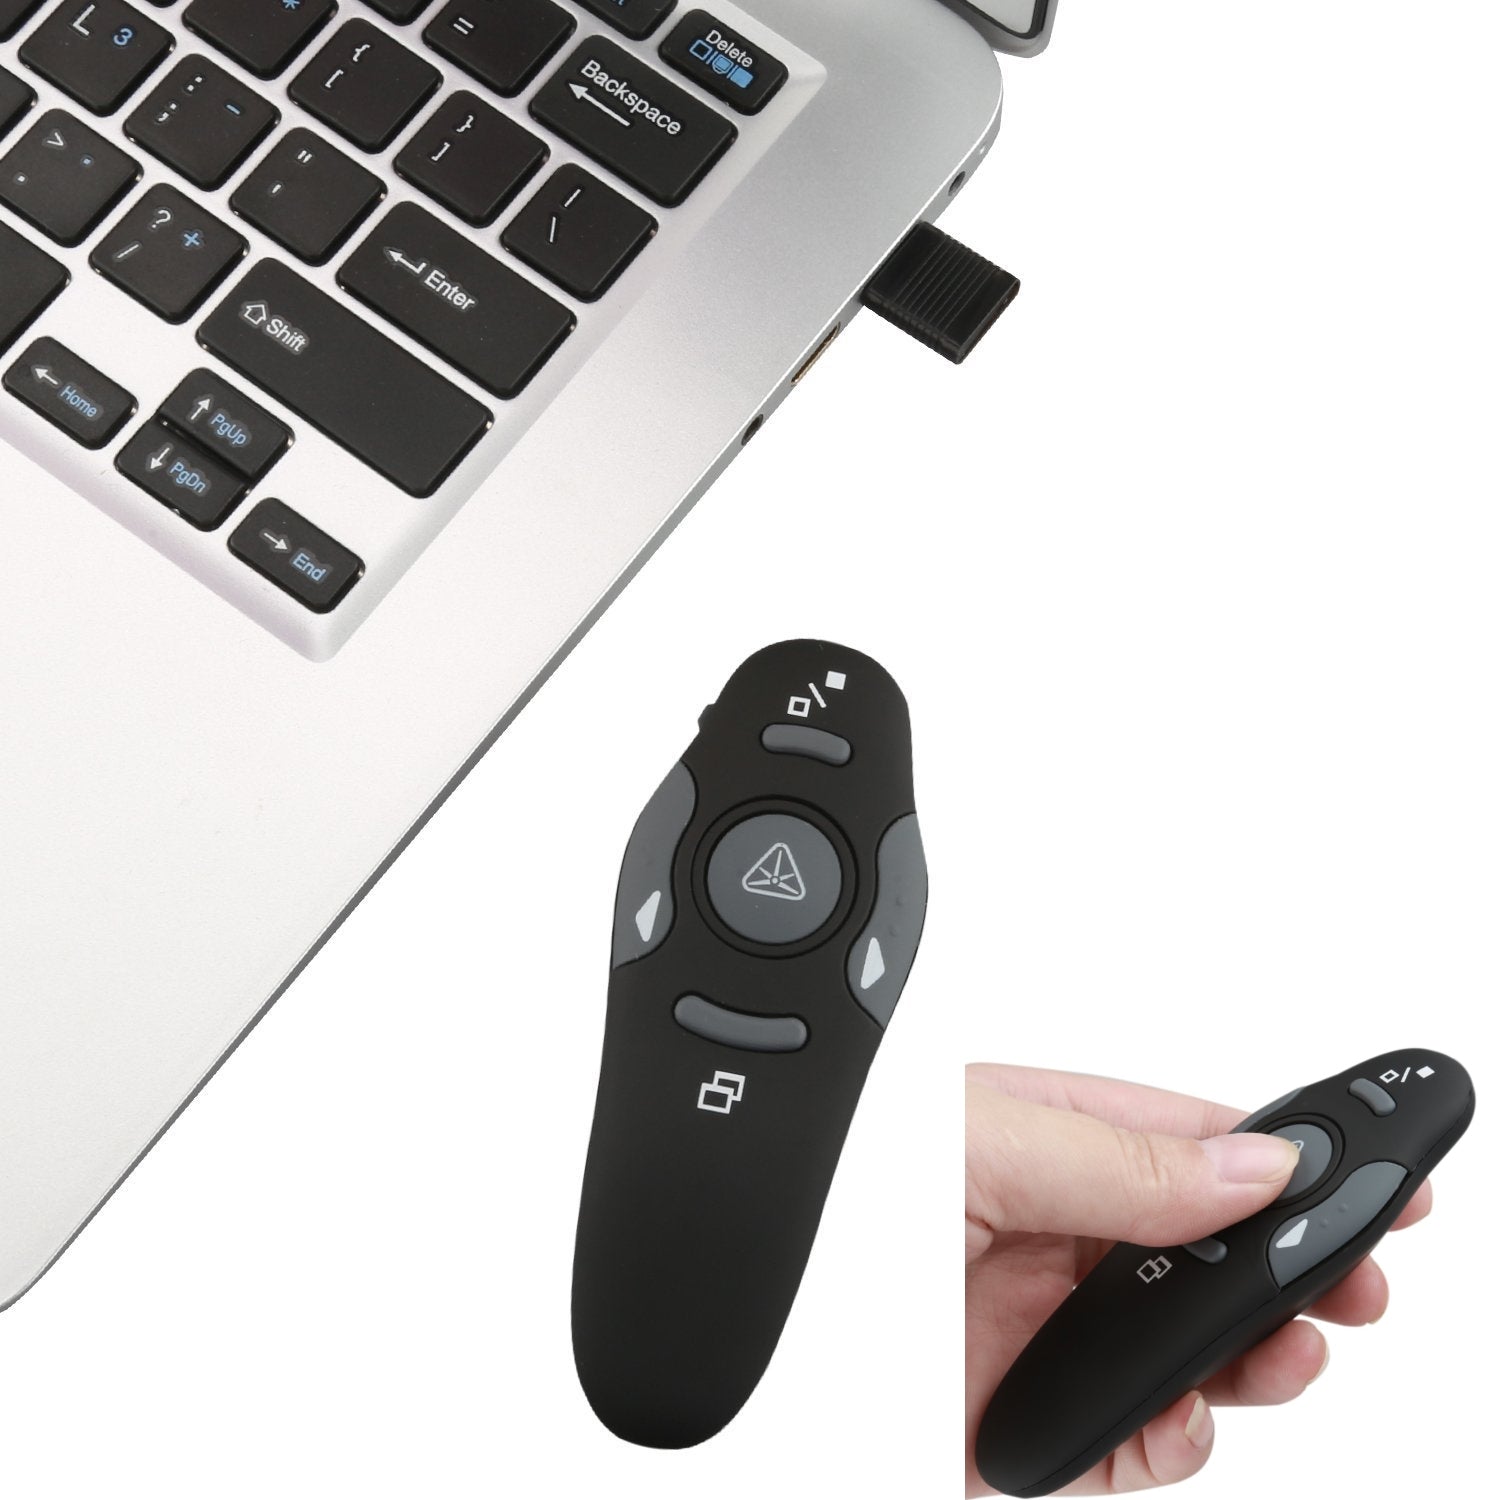 Wireless USB Presenter PowerPoint Remote Control with Laser Pointer